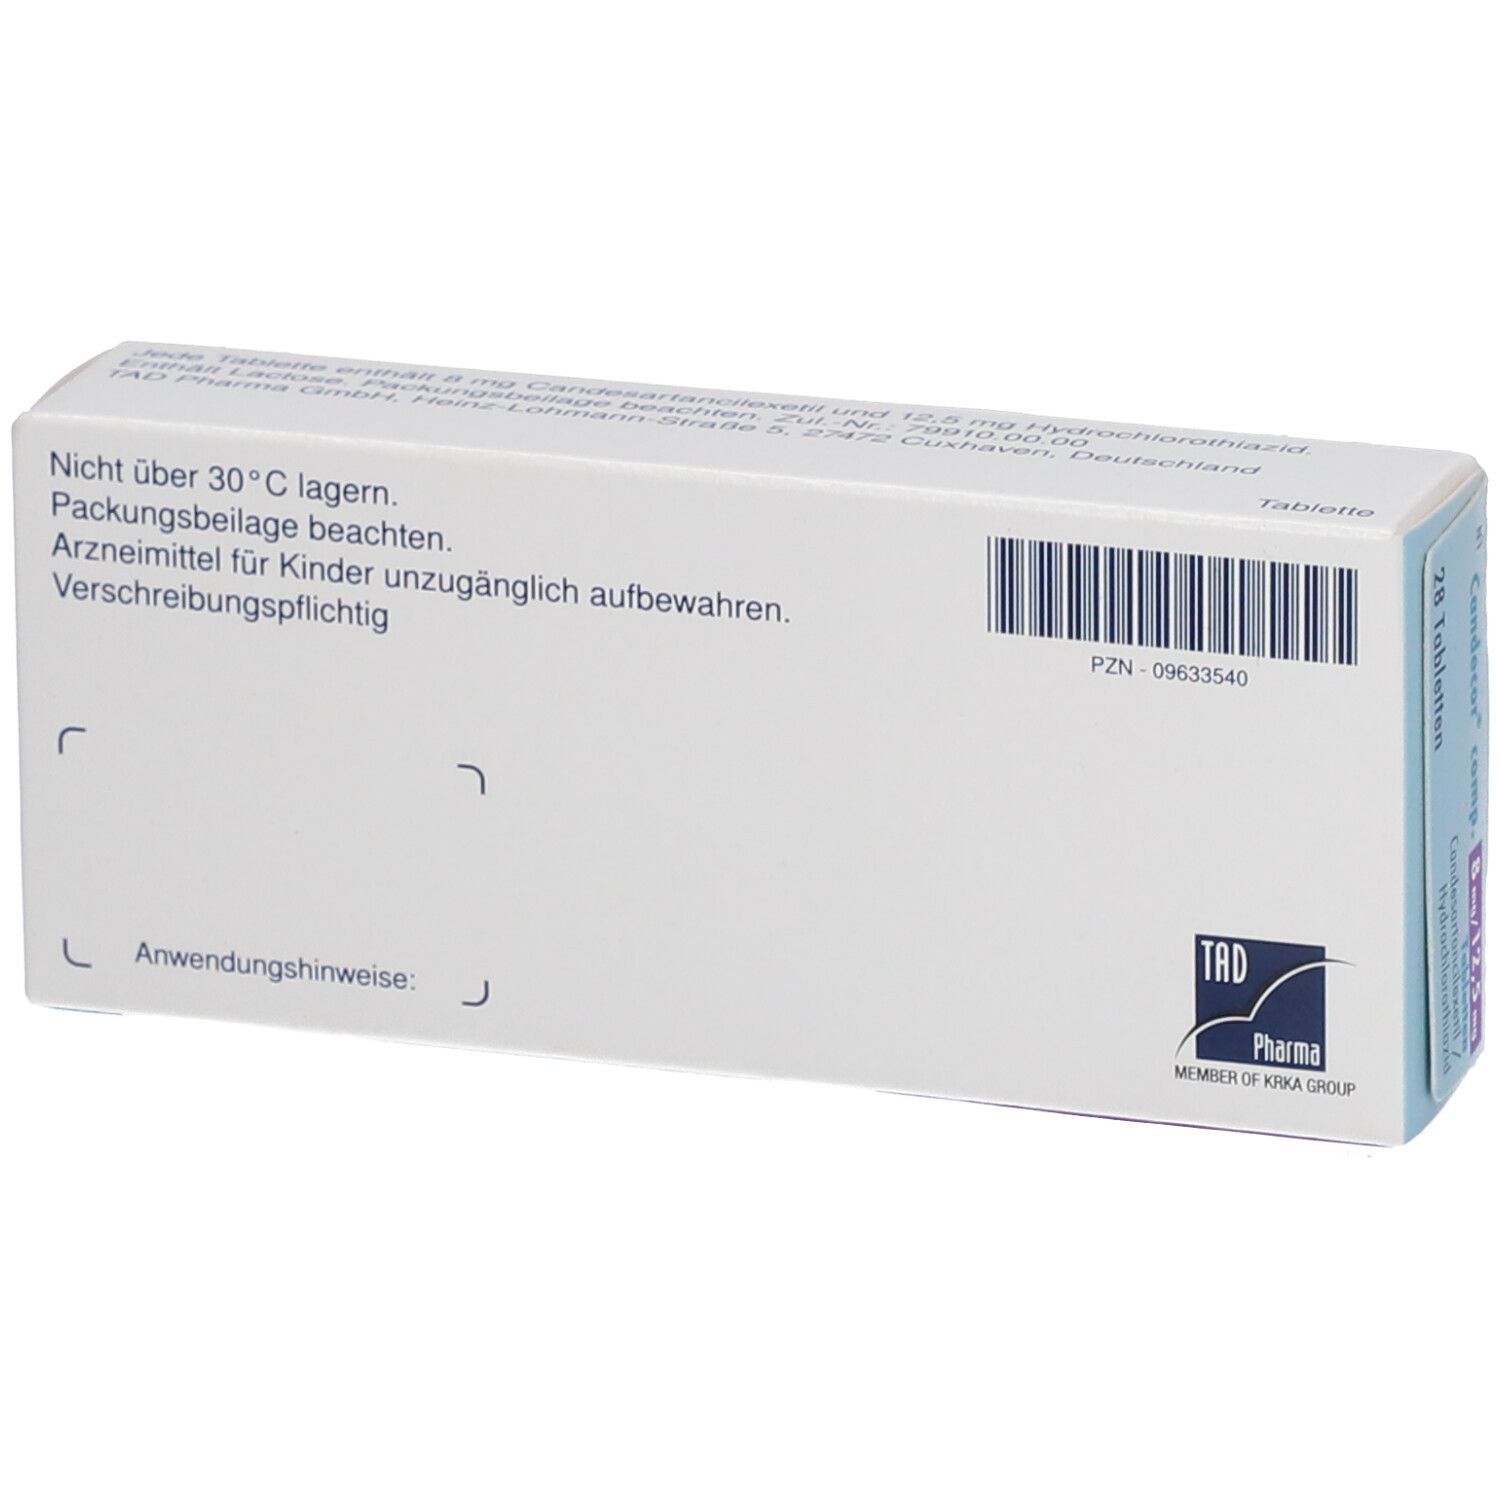 Candecor® comp. 8 mg/12,5 mg